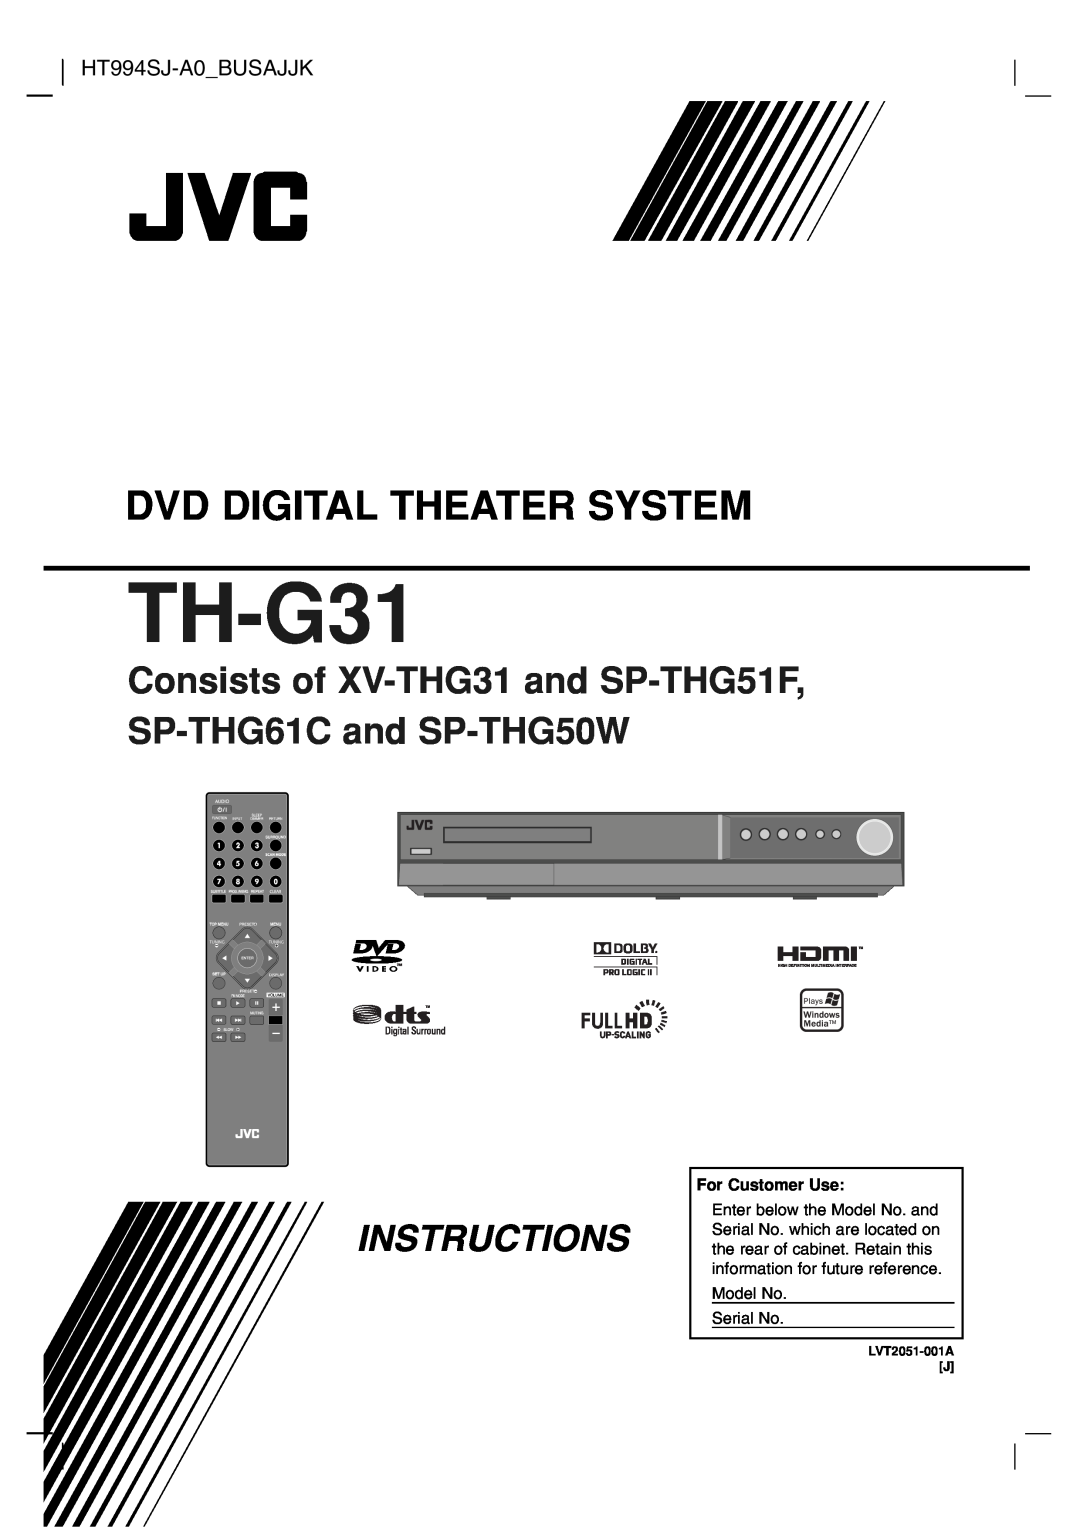 JVC THG31 manual For Customer Use, TH-G31, Dvd Digital Theater System, Instructions, HT994SJ-A0 BUSAJJK, LVT2051-001AJ 